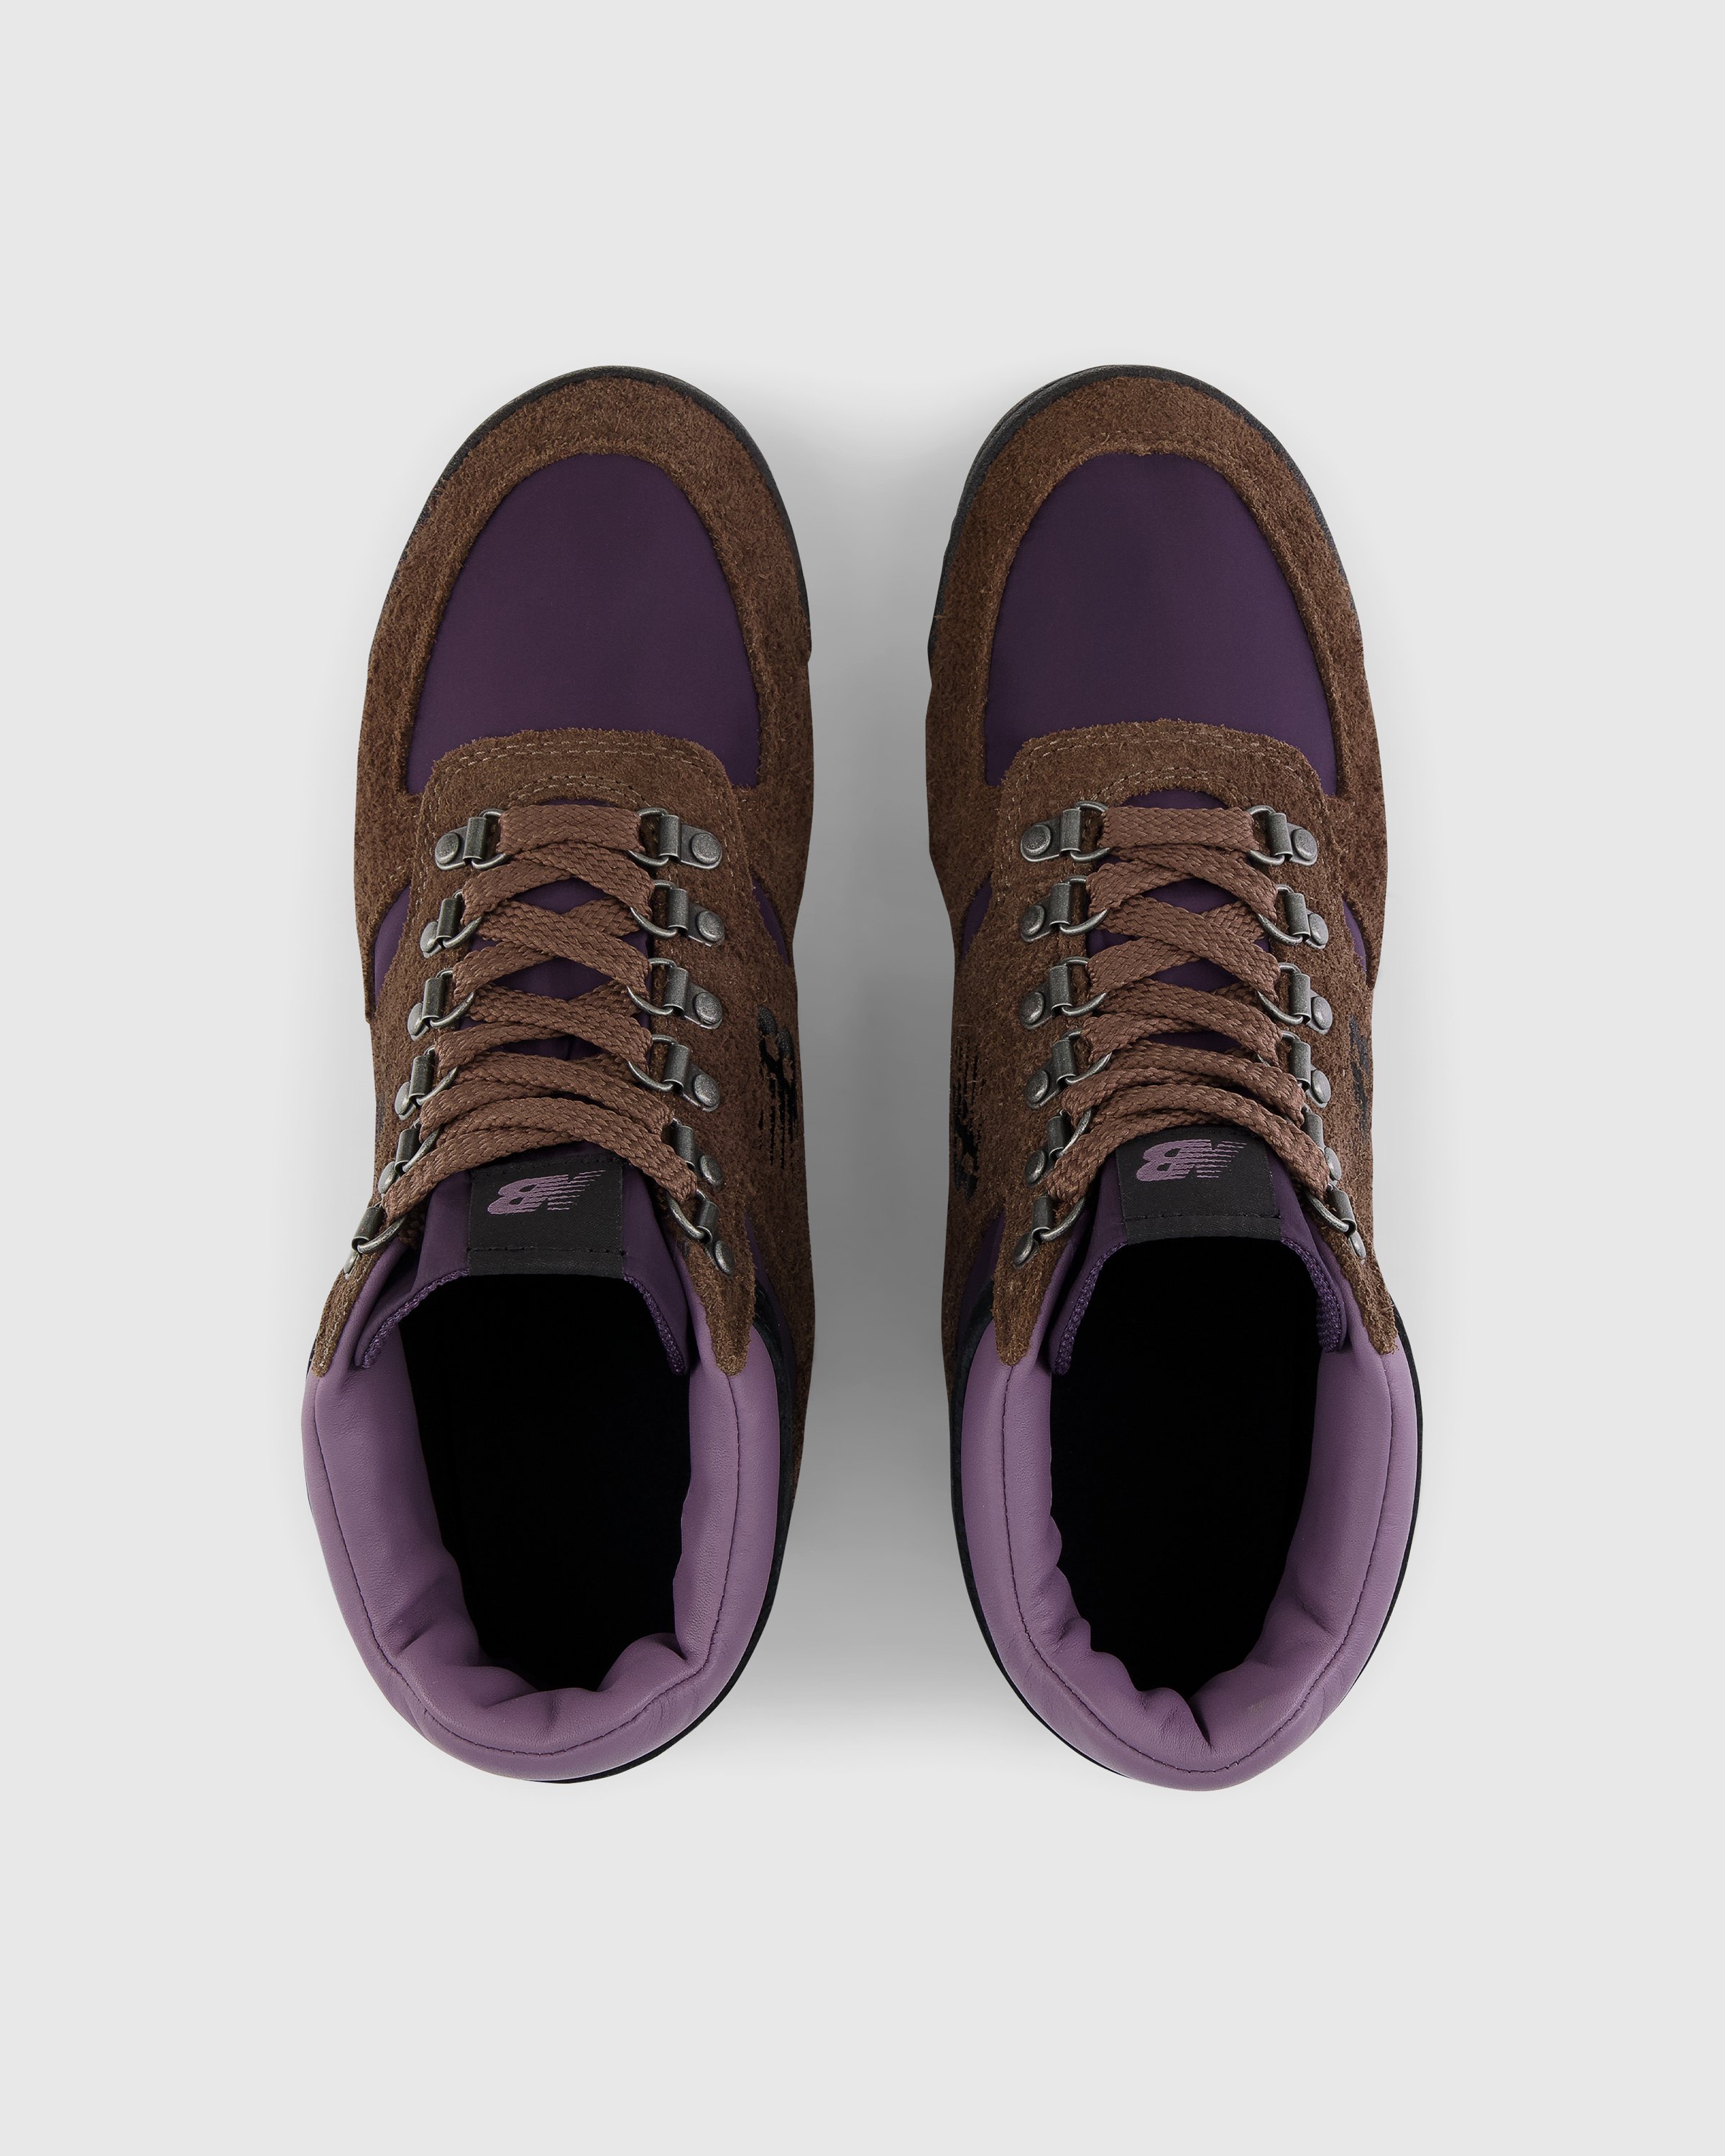 New Balance - URAINMI Rainier Dark Mushroom - Footwear - Brown - Image 4